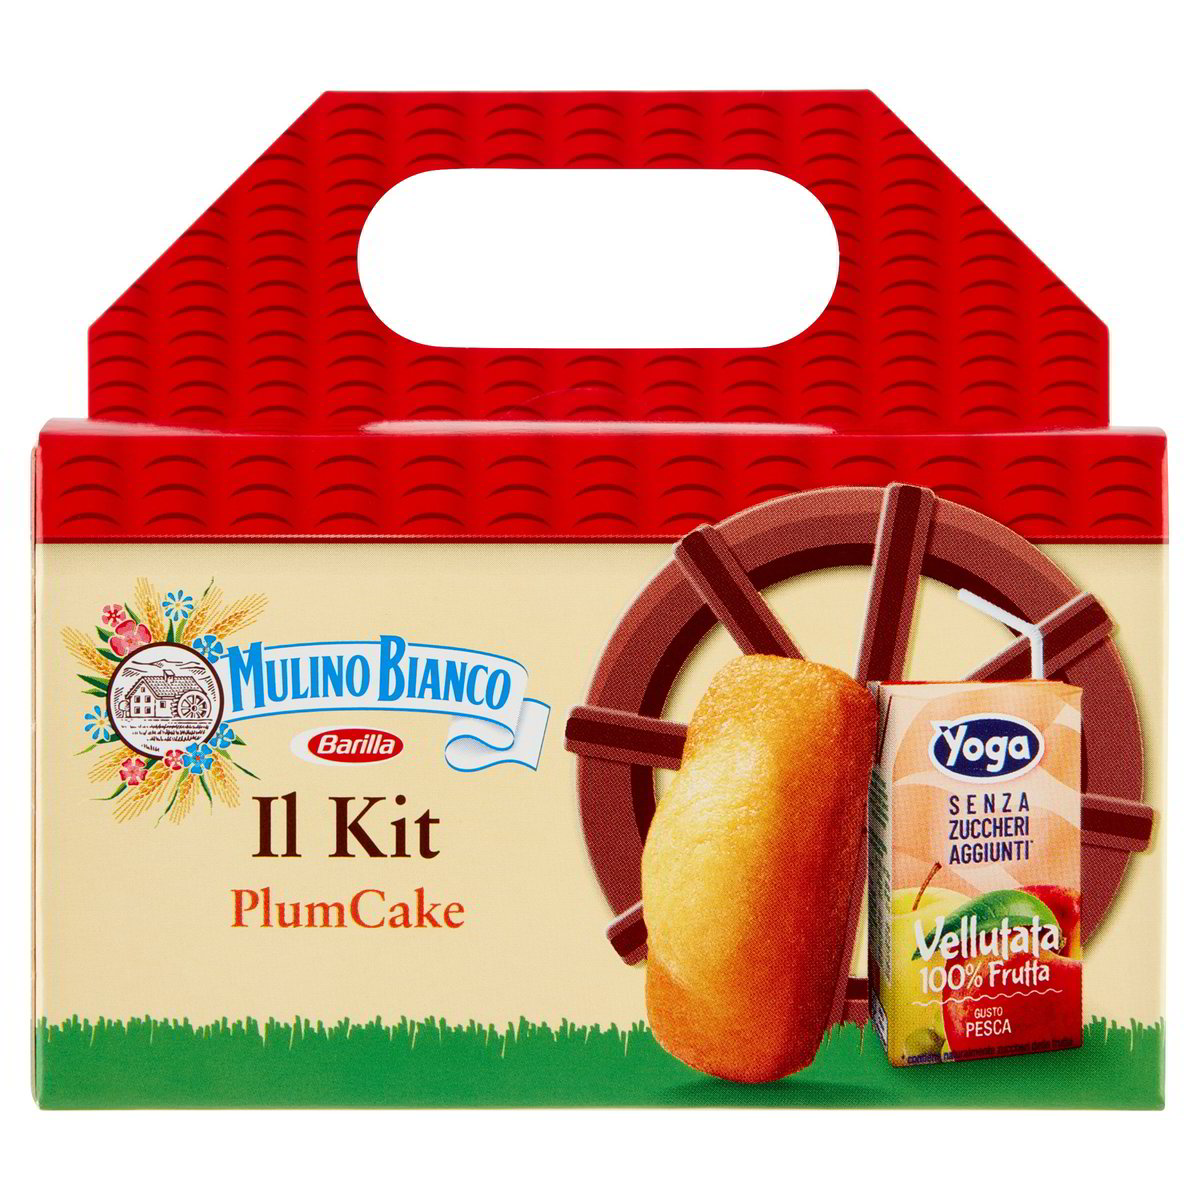 Il Kit Plumcake